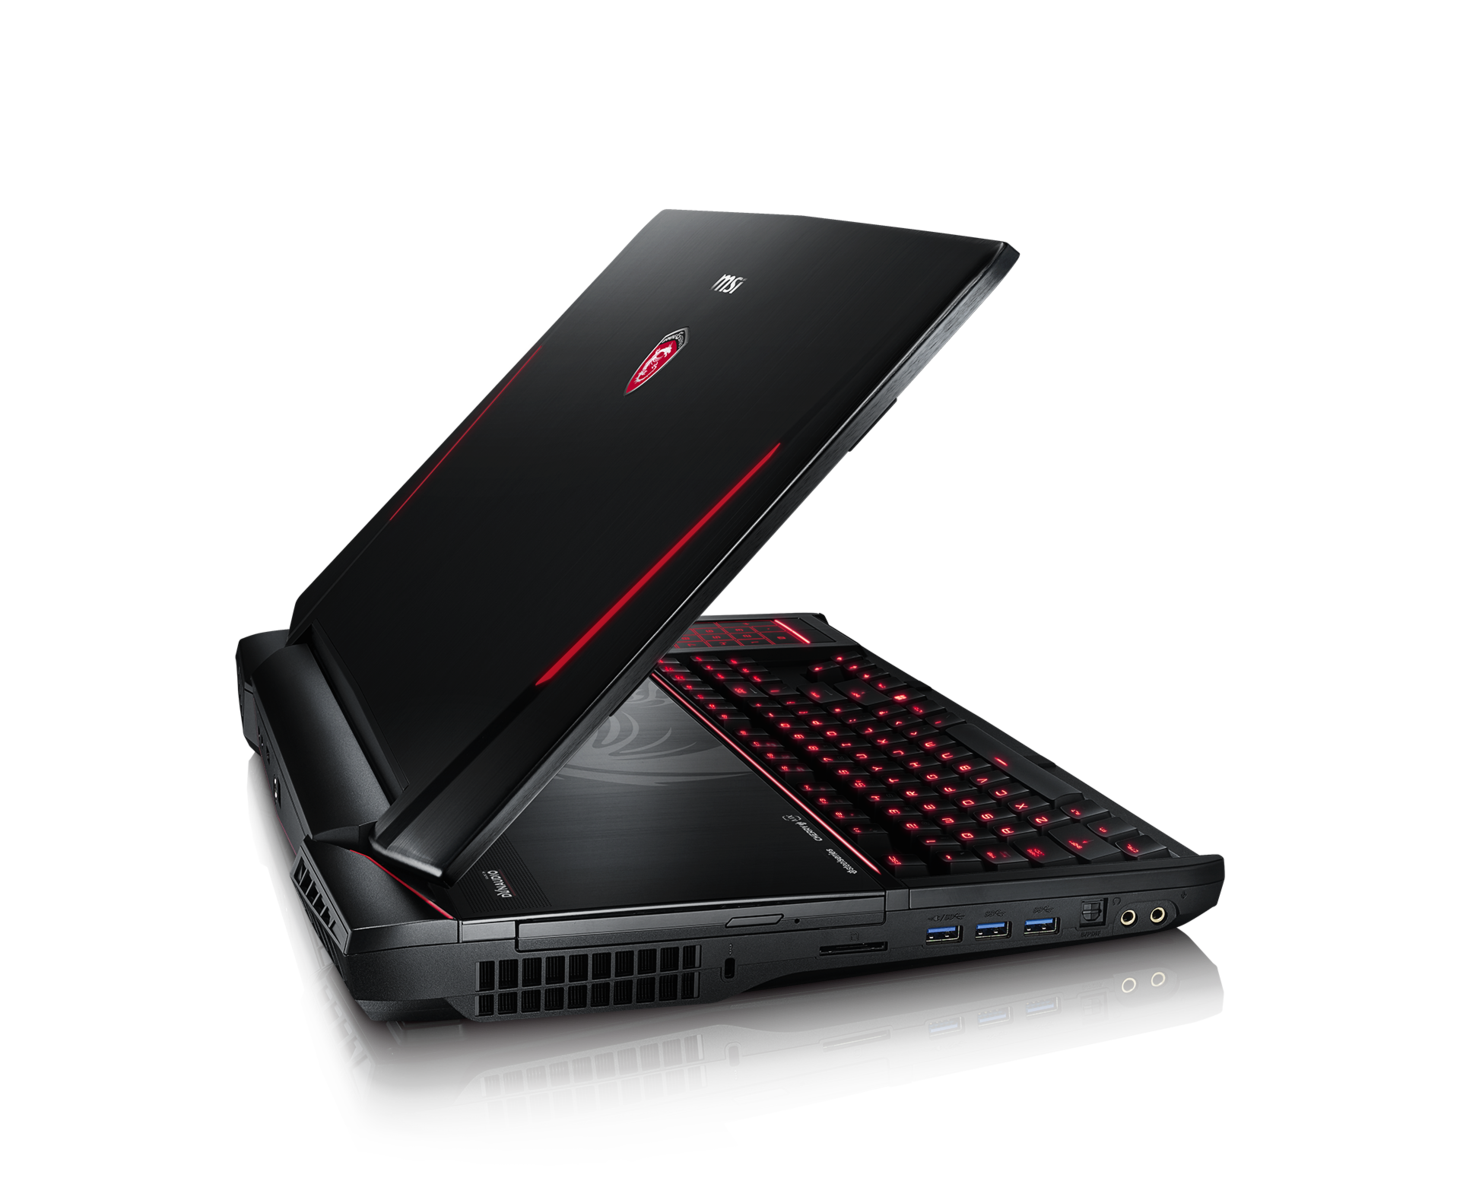 Msi Presents Gt80 Titan Gaming Laptop With Gtx 980m Sli Notebookcheck